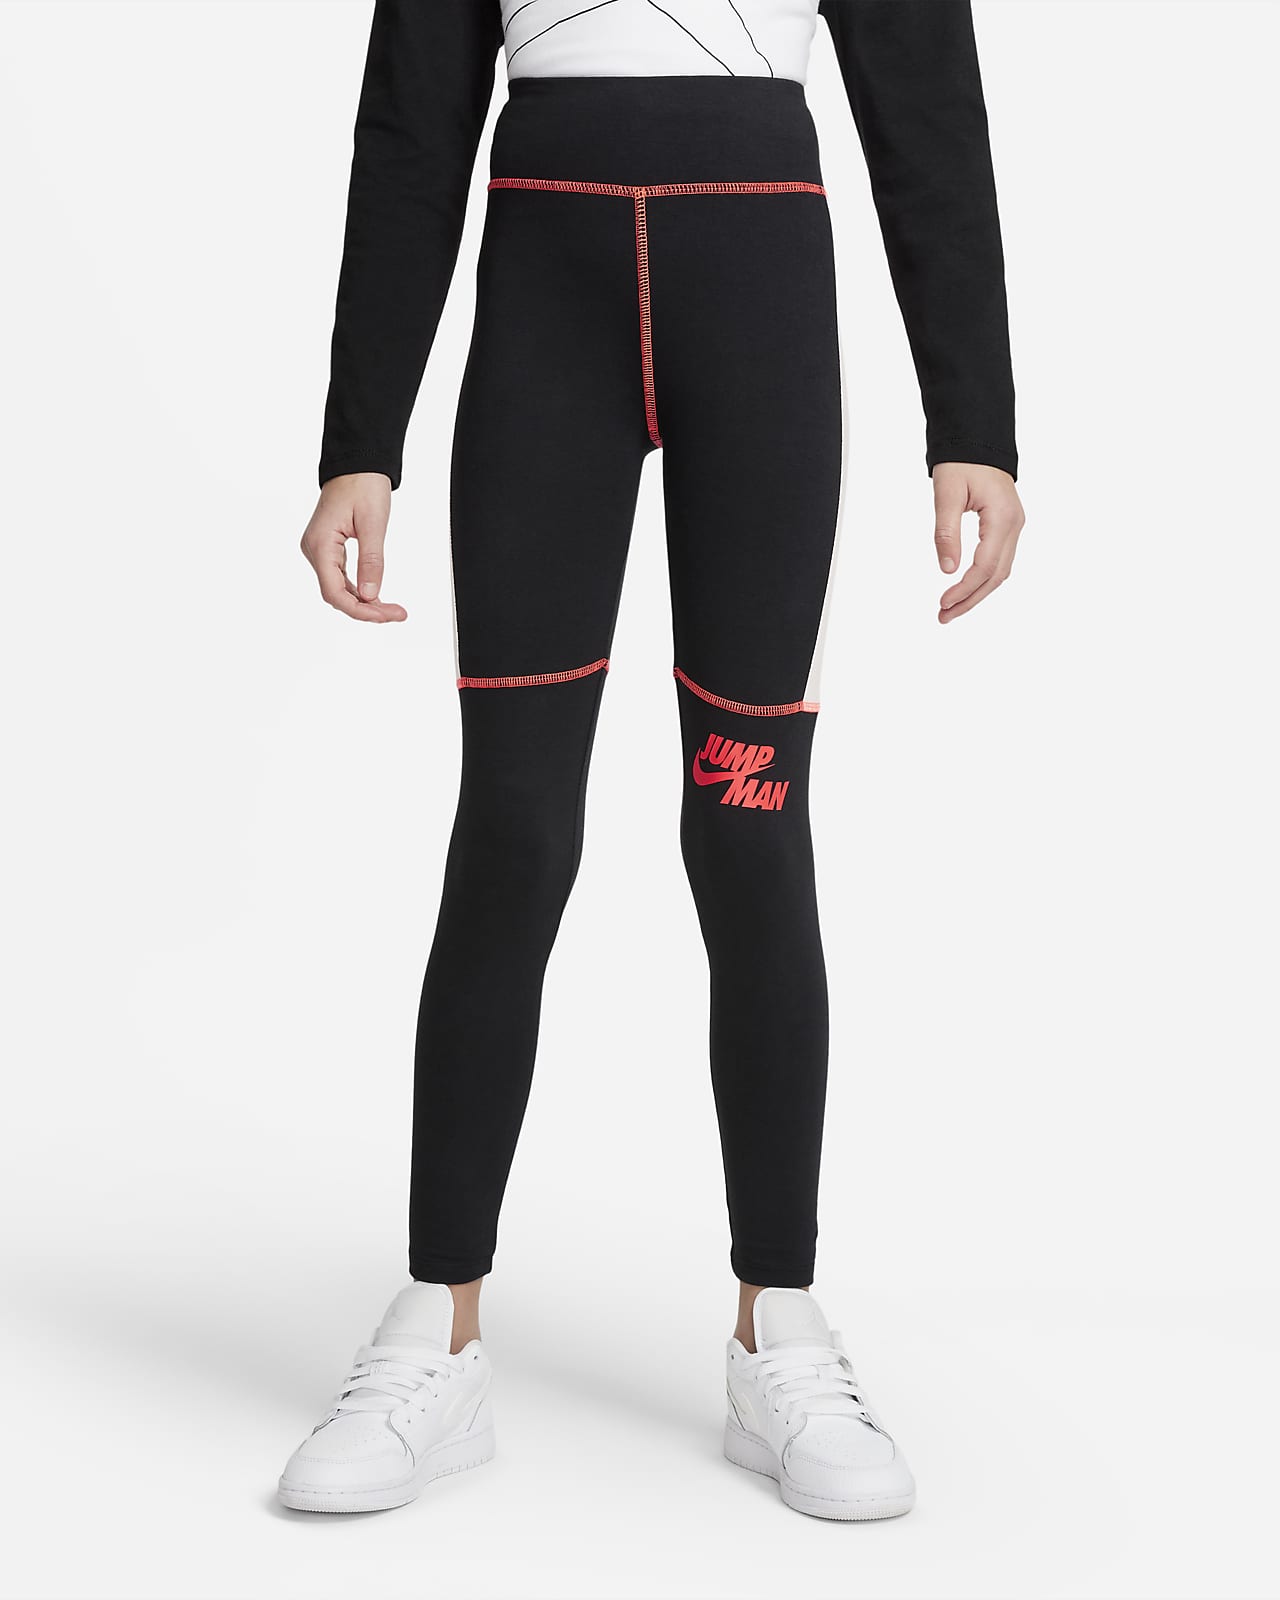 Nike Dri-fit Go High Waist 7/8 Leggings In Ember Glow/ Black | ModeSens